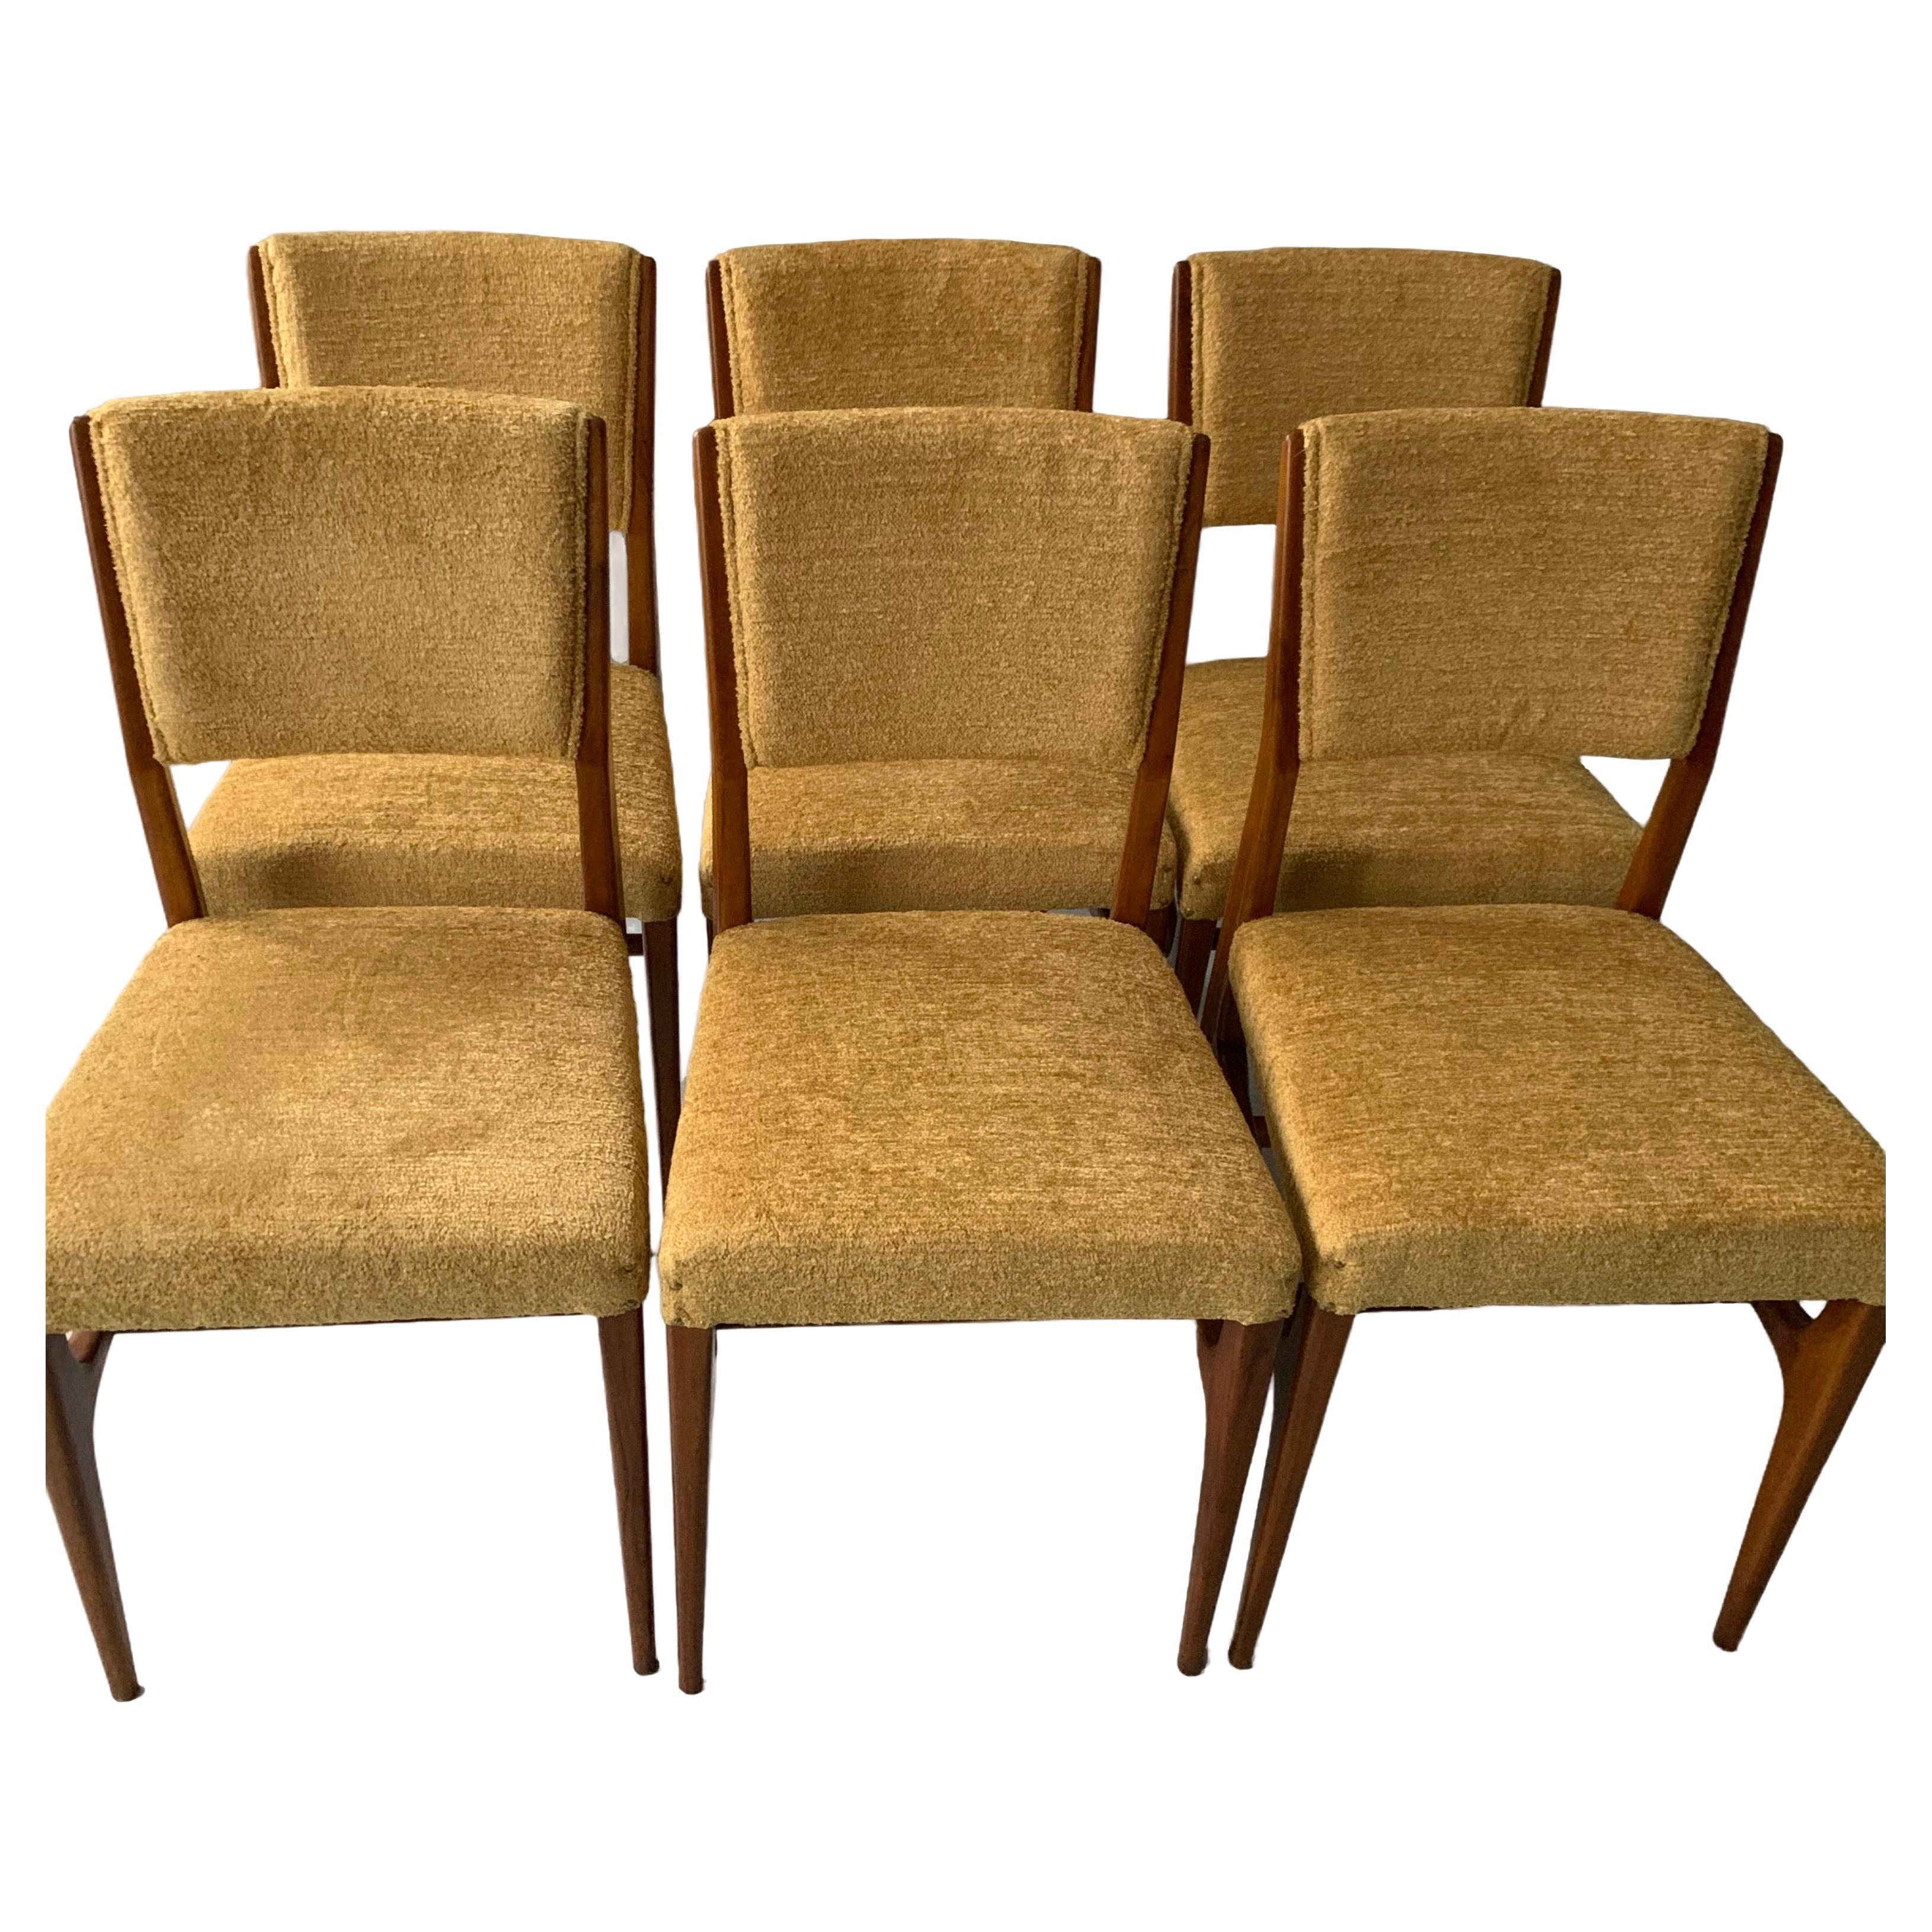 A rare set of Gio Ponti dining chairs.